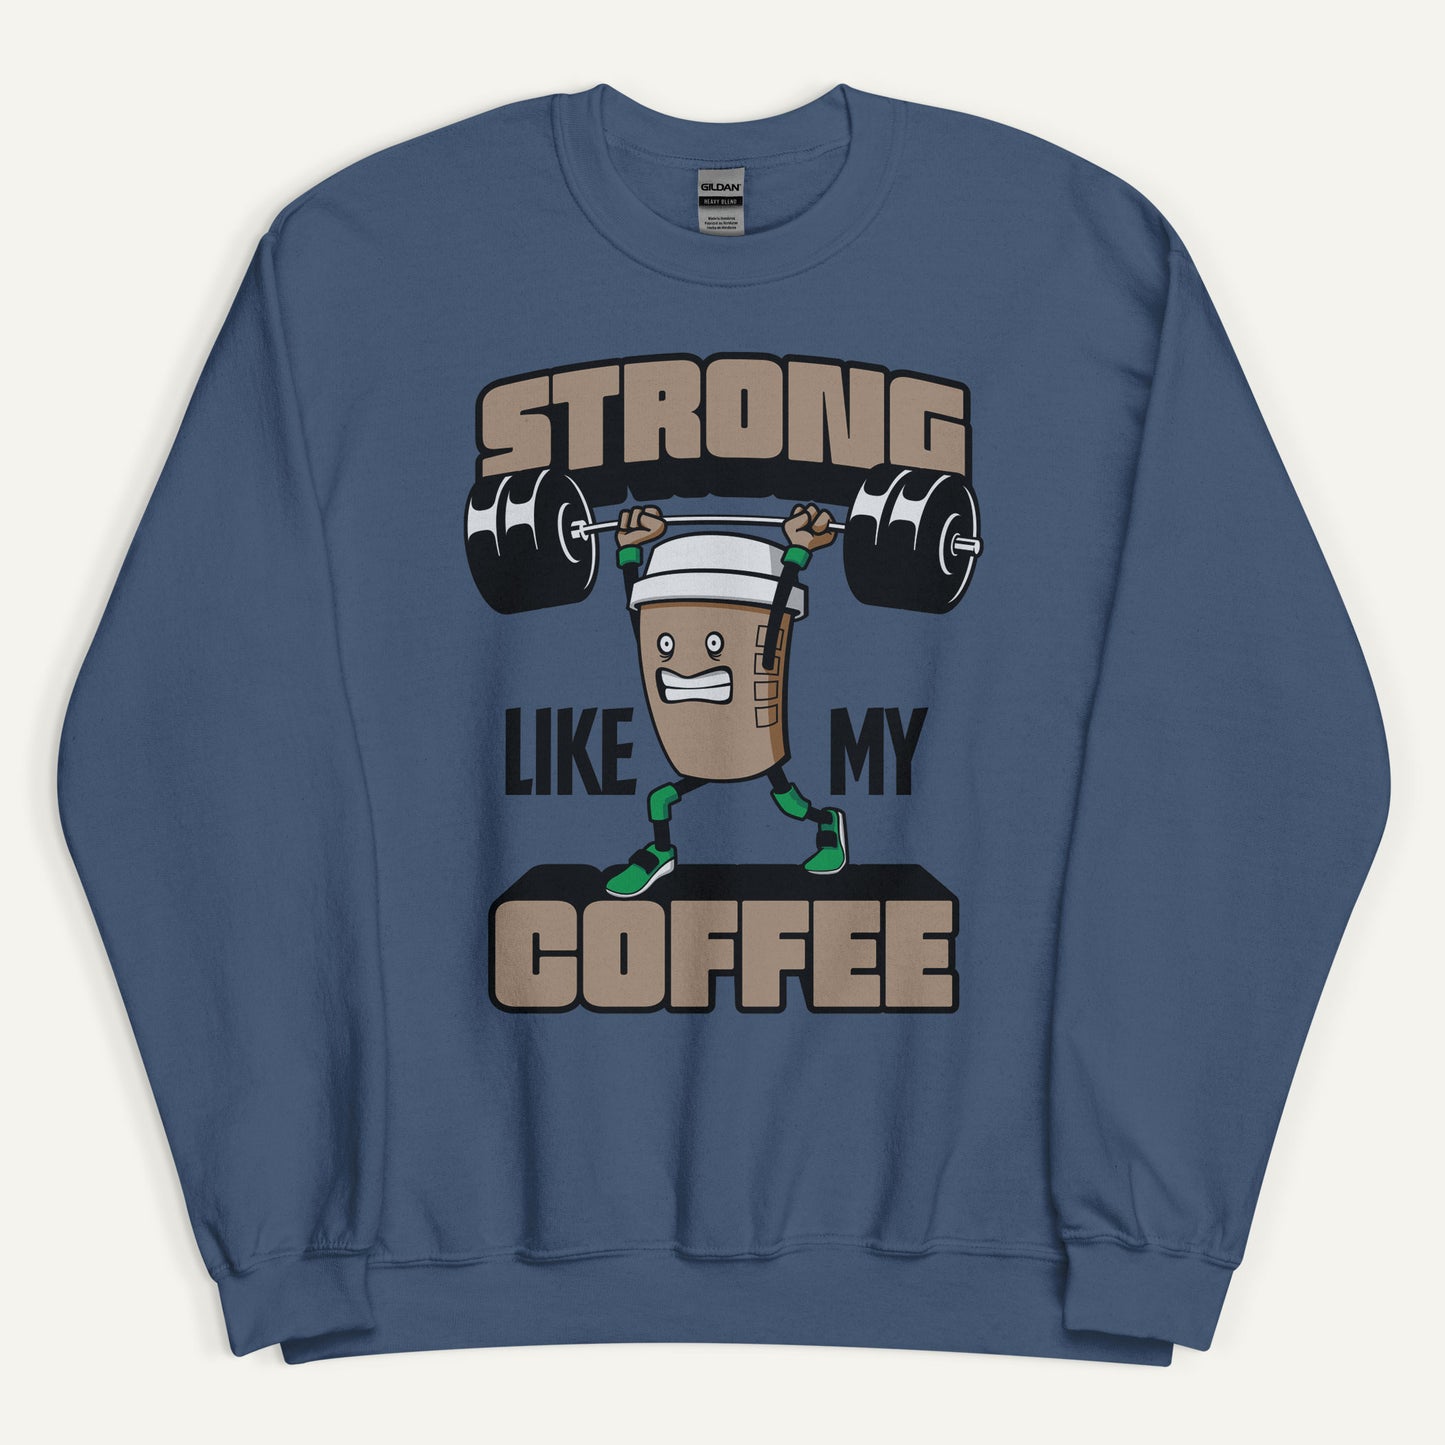 Strong Like My Coffee Sweatshirt